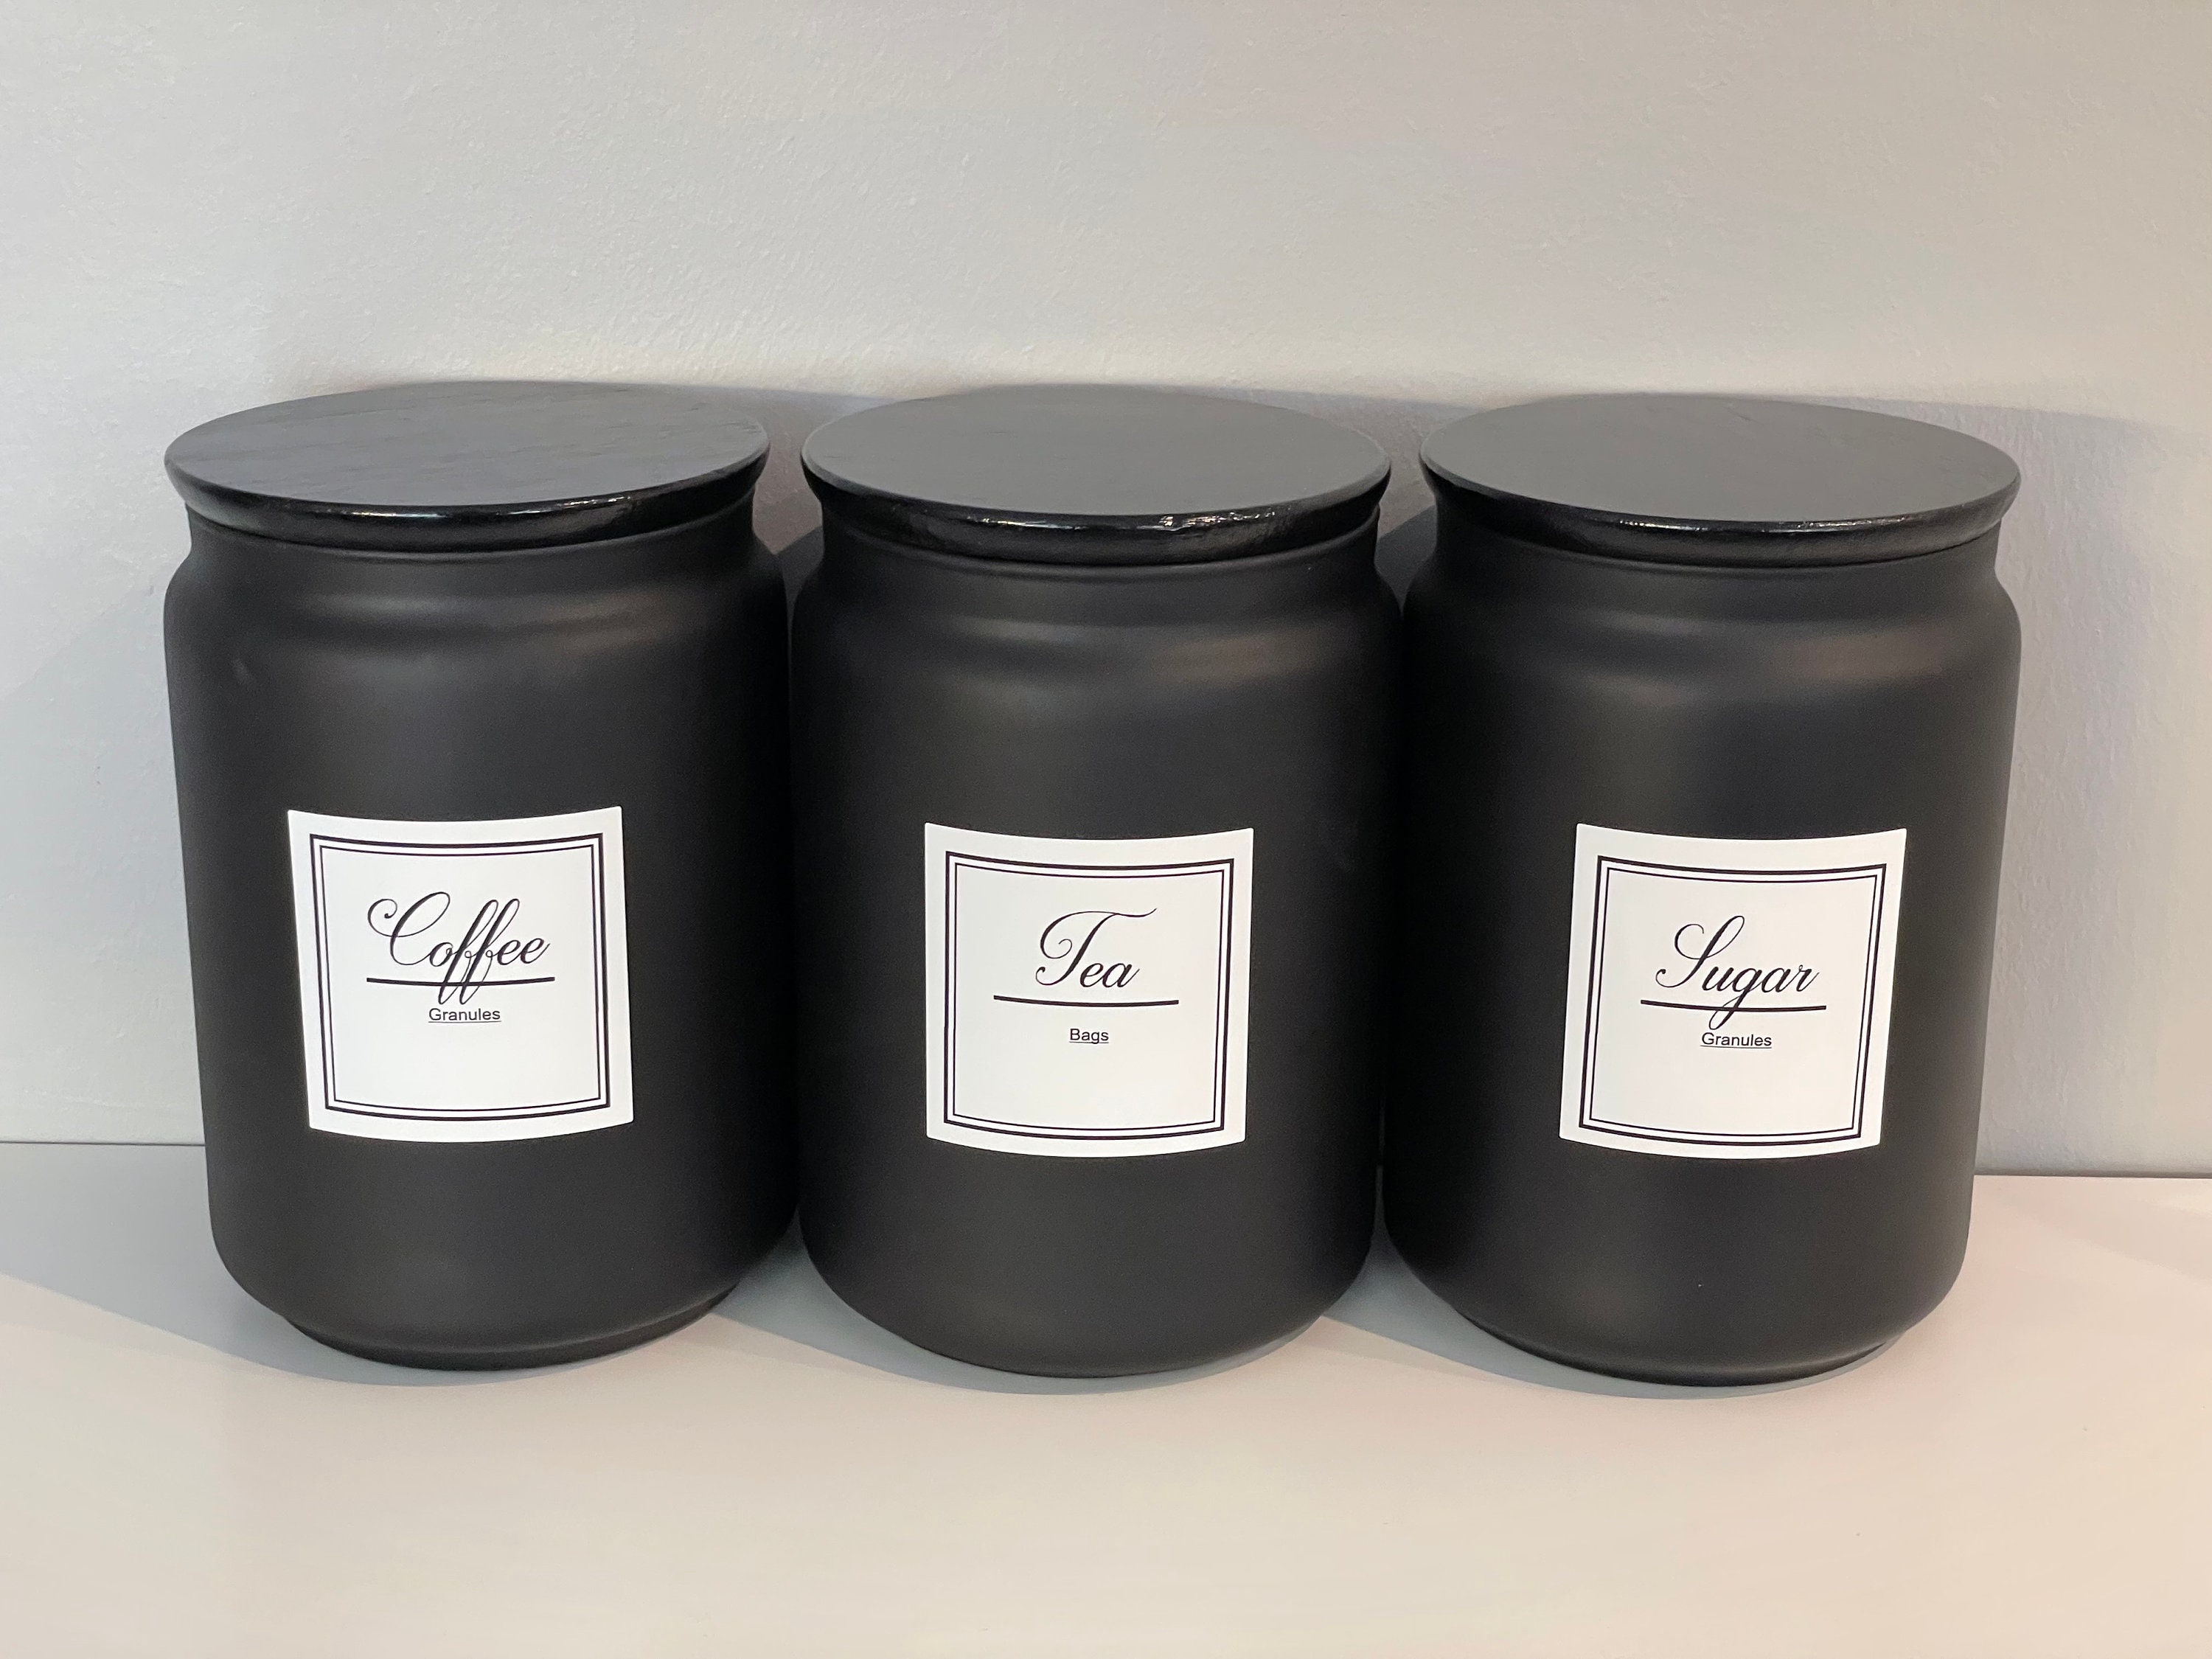 Glass Storage Jars - Tea/Coffee/Sugar